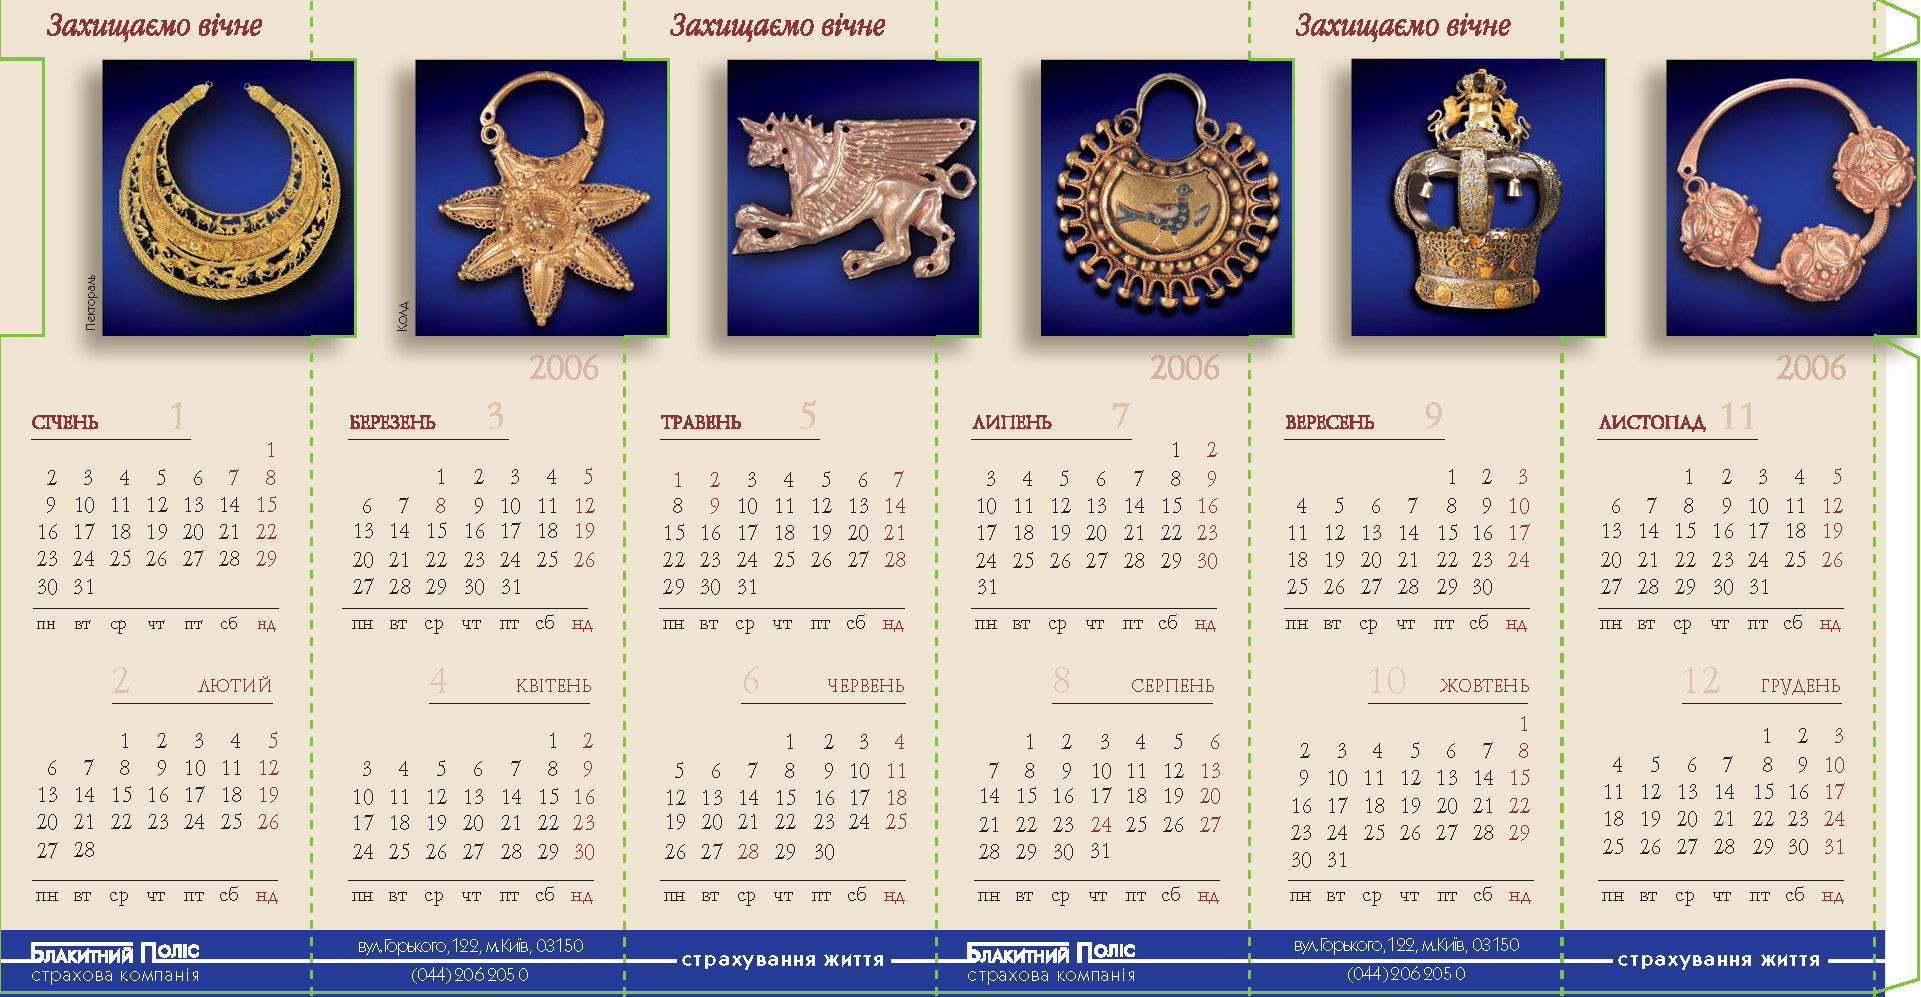 https://goldenukr.com.ua/ffiles/7_publications/1_publications/calendars/2006_kalendar_nastol.jpg